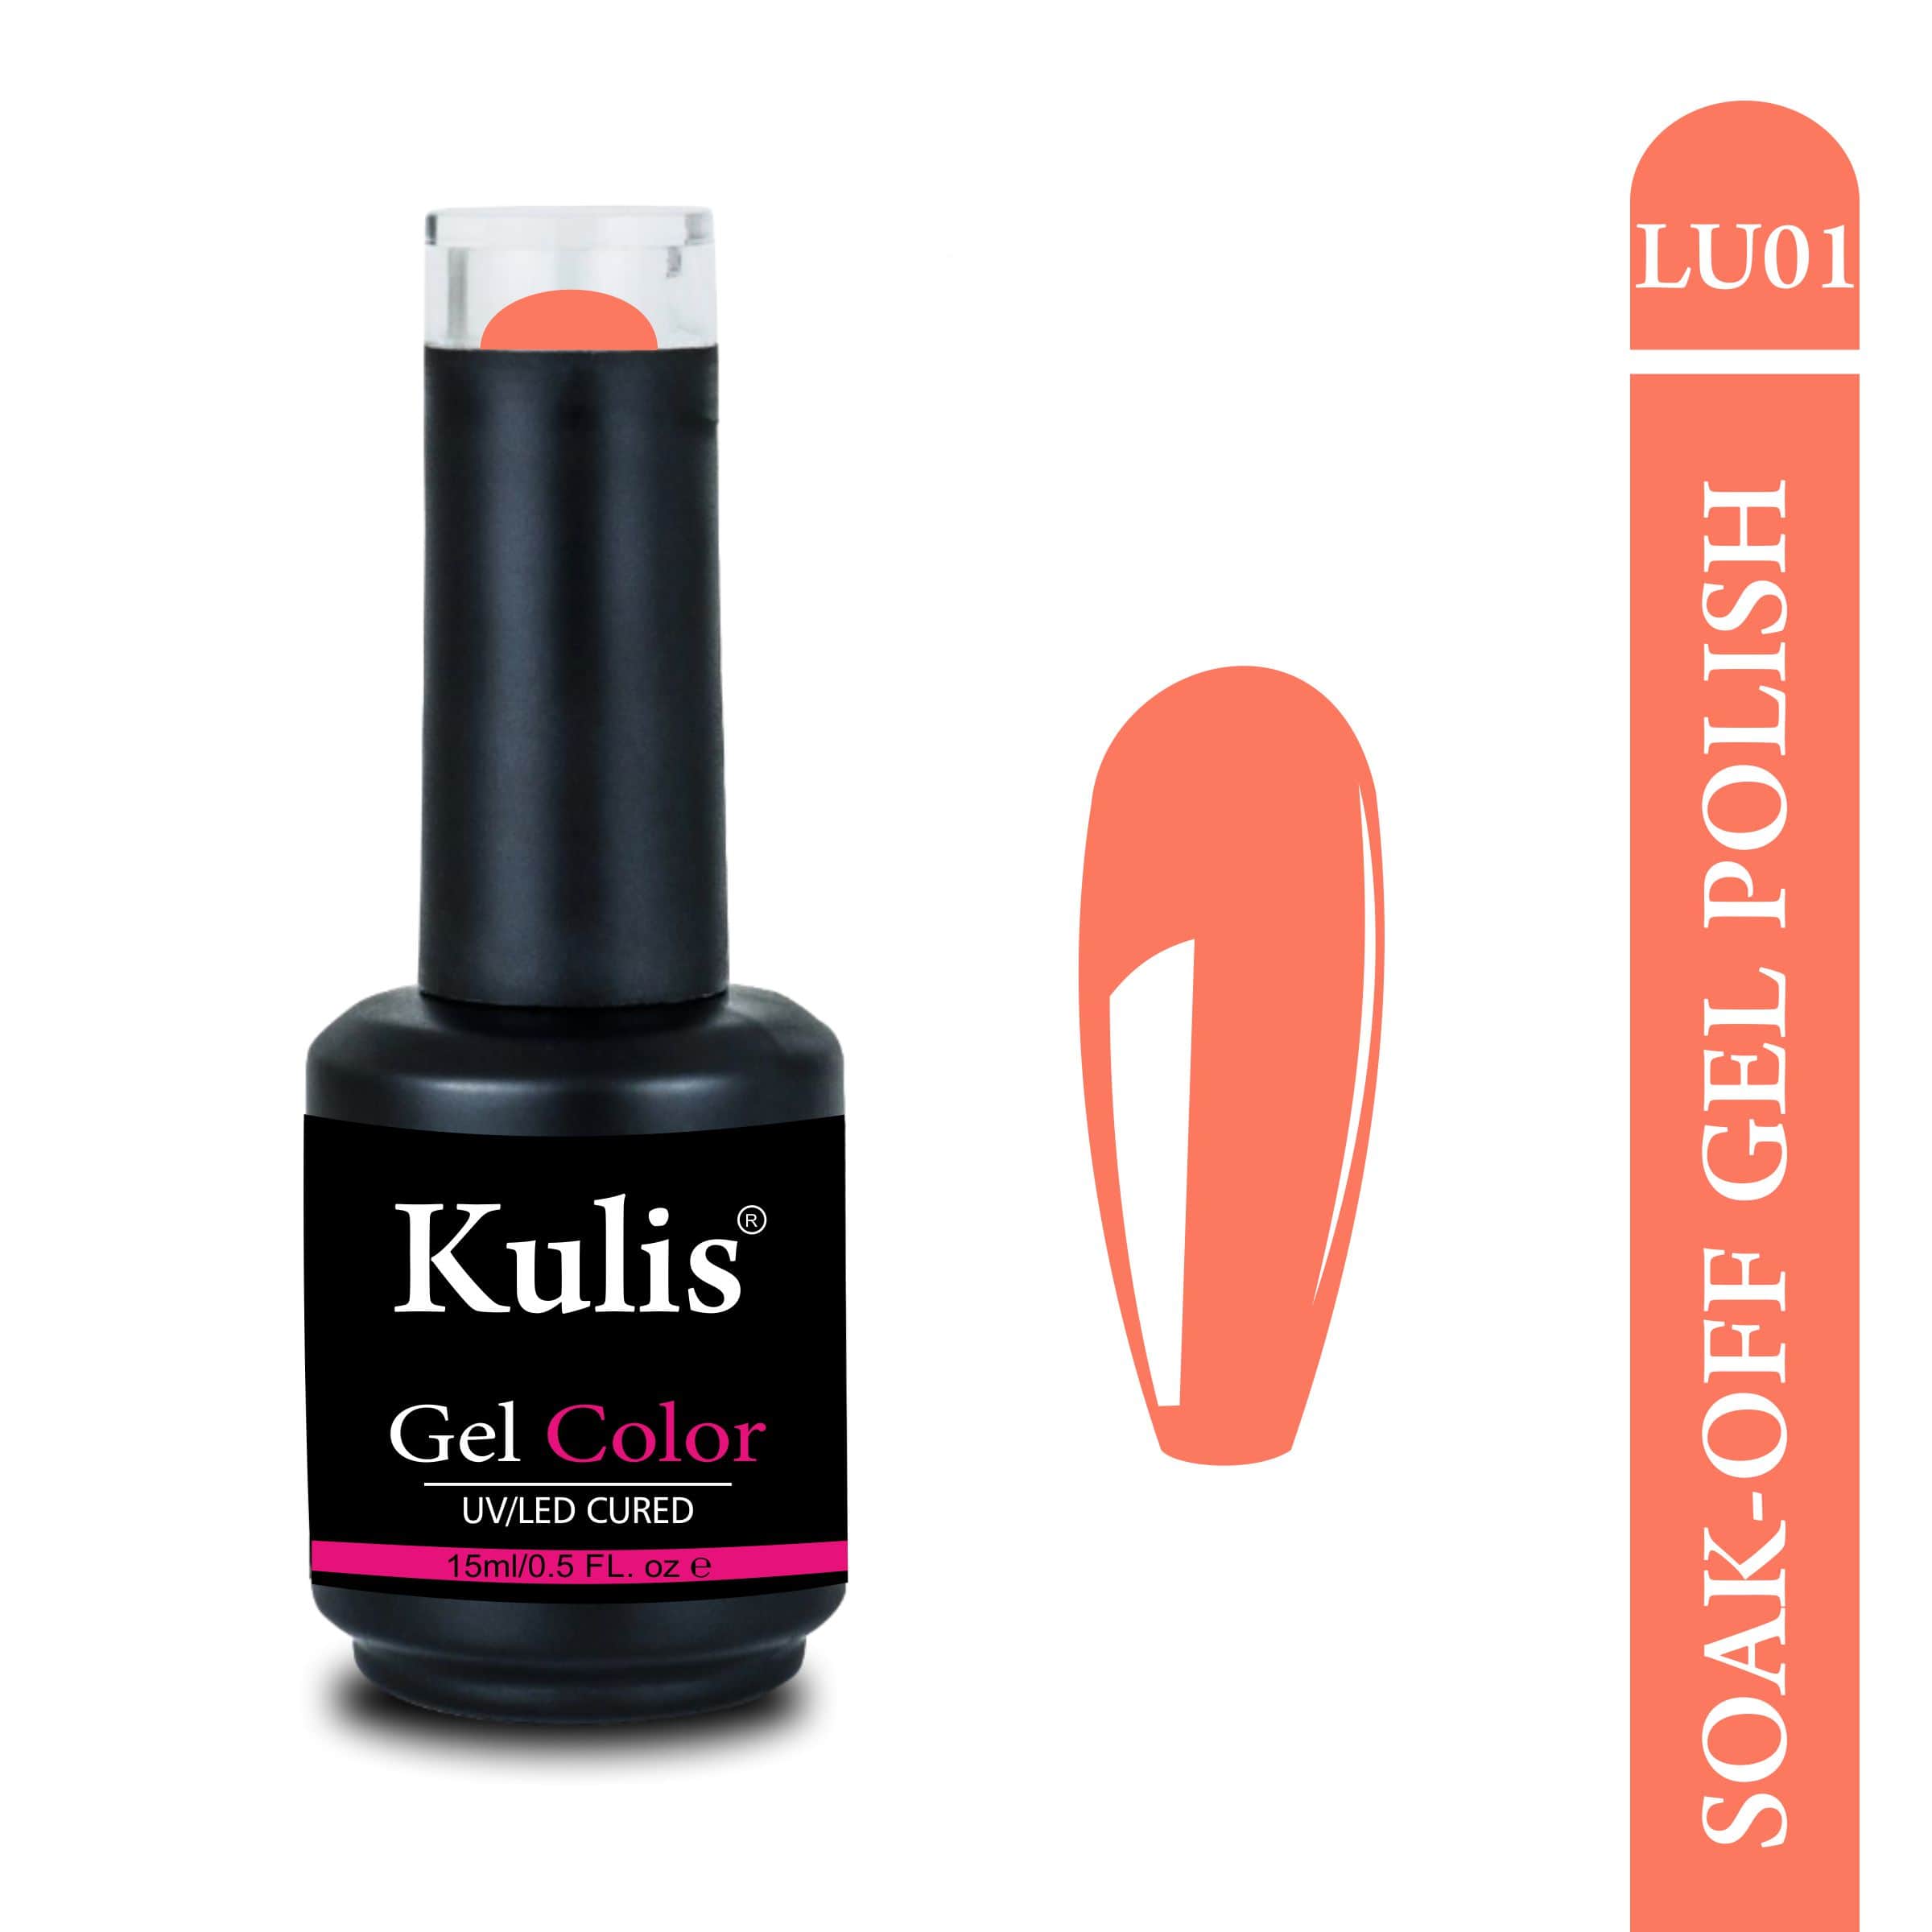 Canni 16ml UV Gel pink dream series UV nail gel polish Nail Art Need UV  Lamp to Cure C262 - Price in India, Buy Canni 16ml UV Gel pink dream series  UV